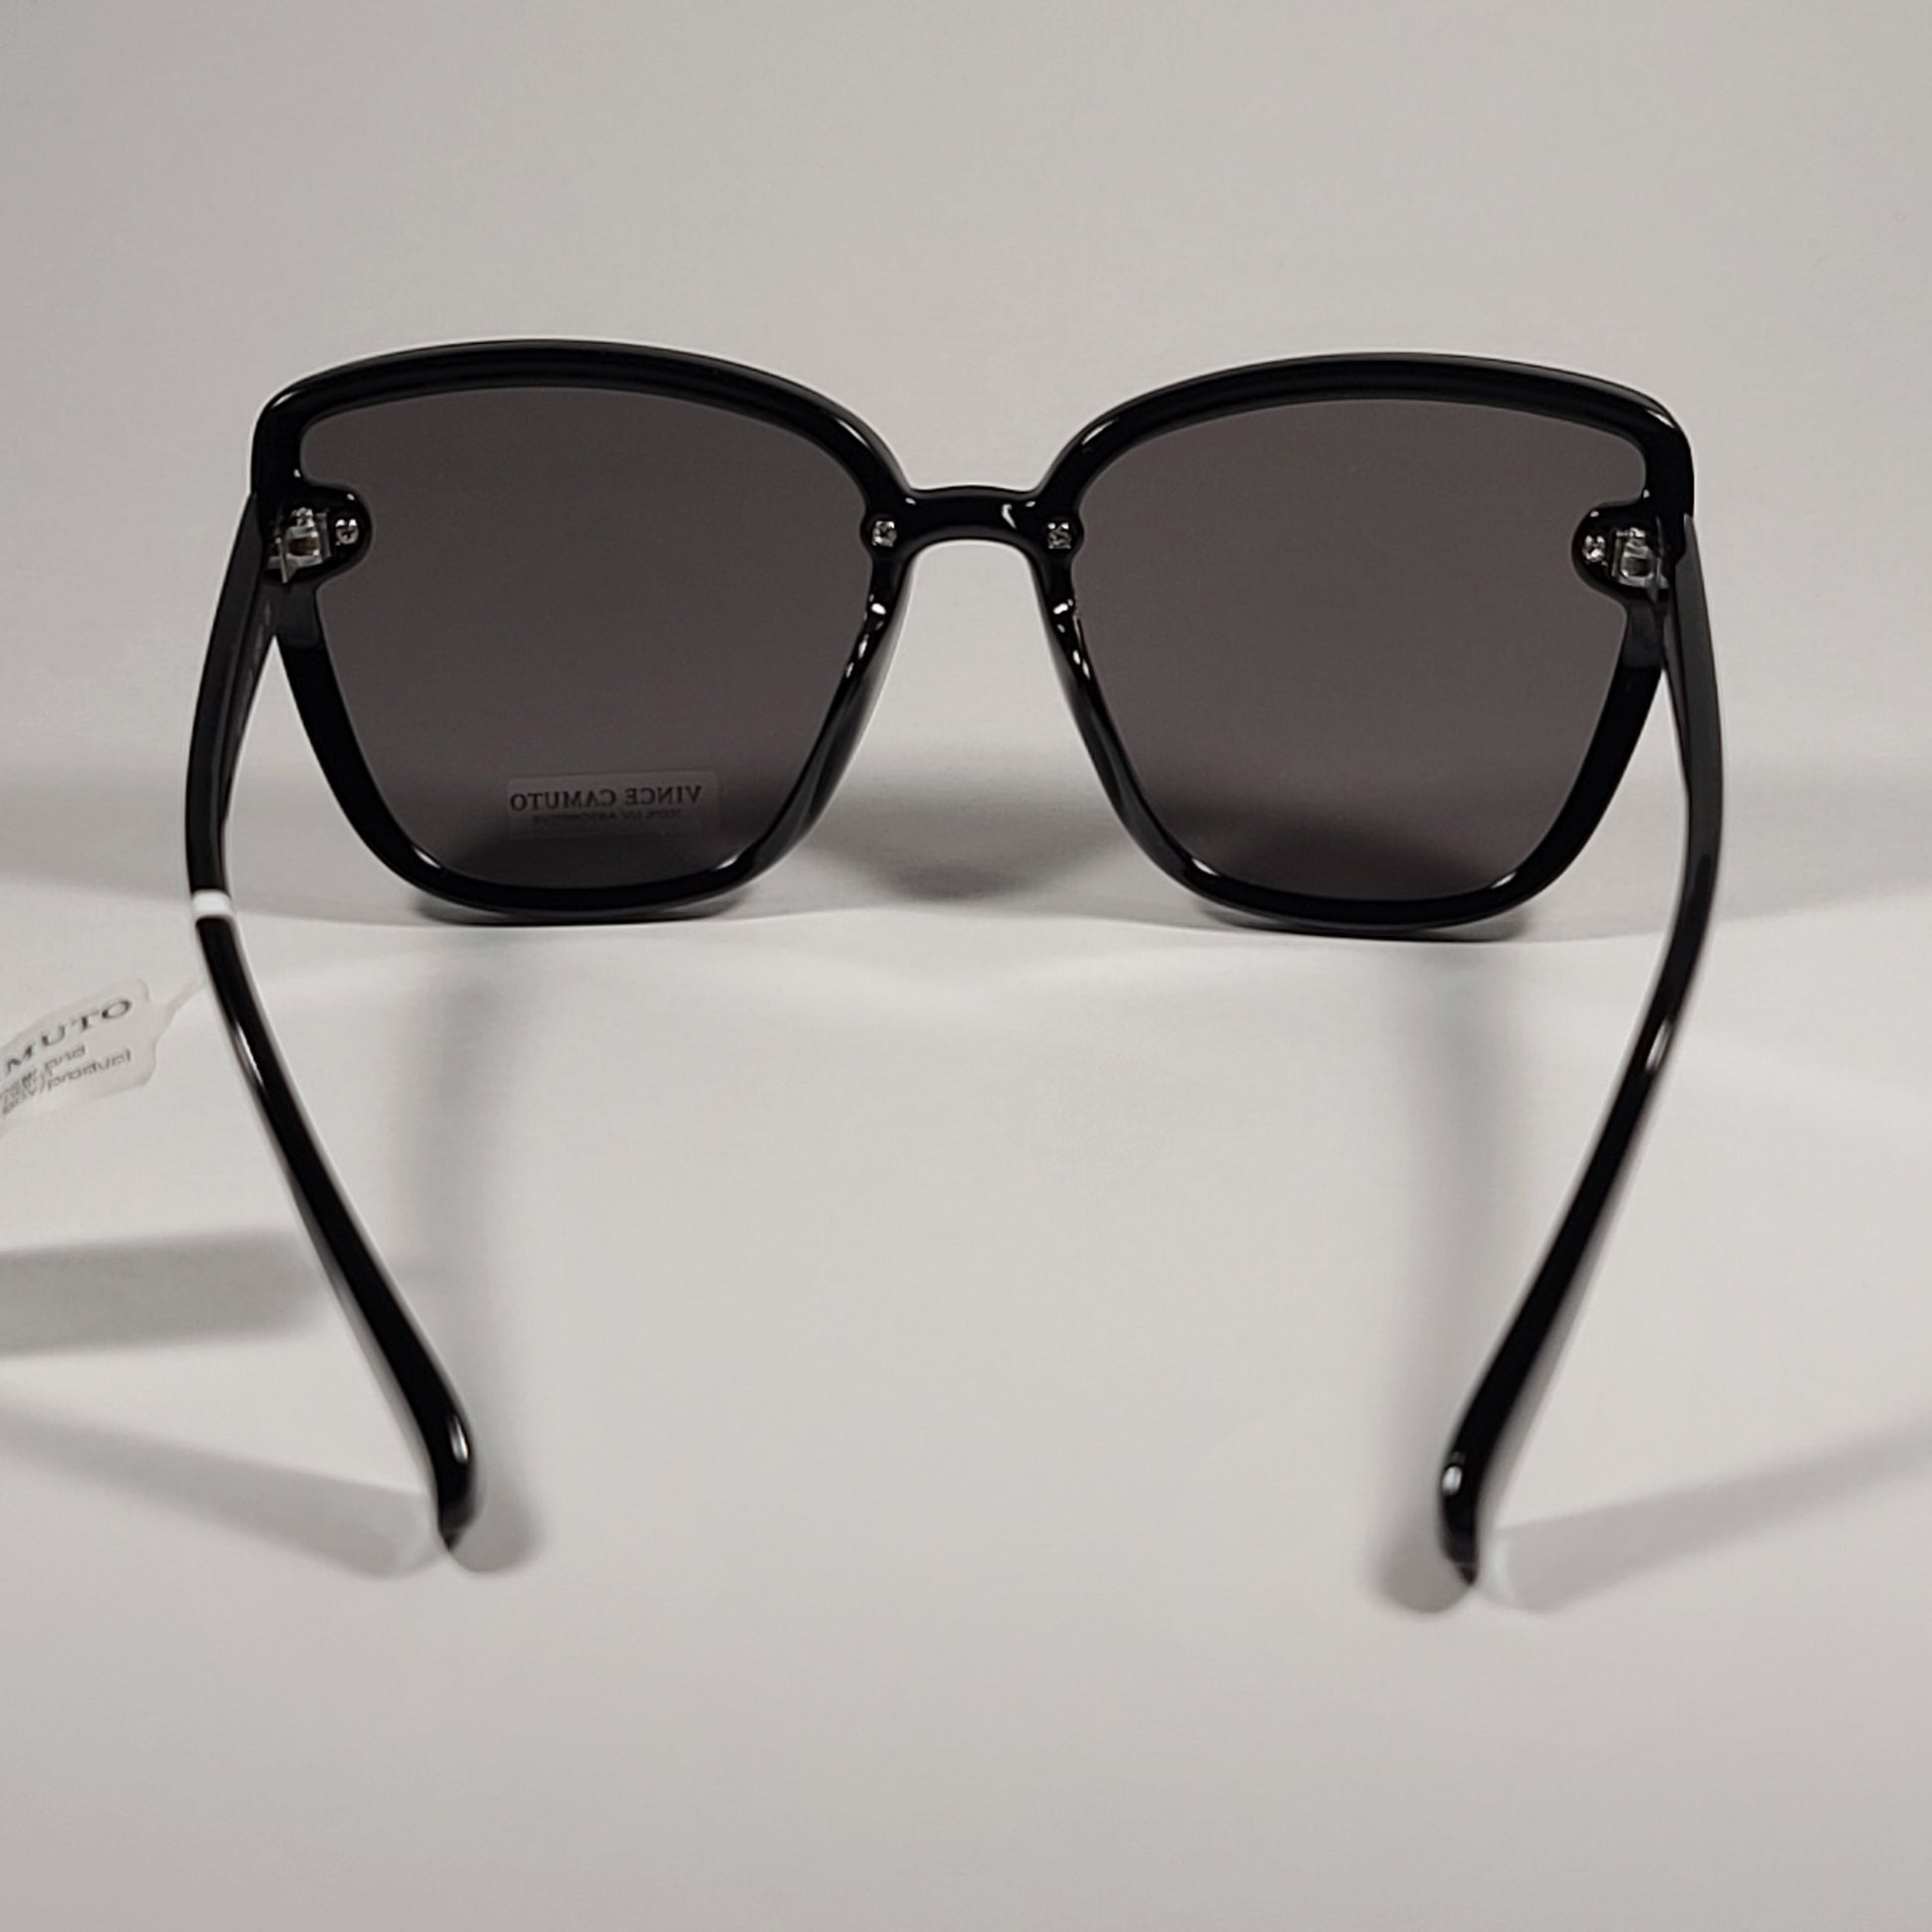 Vince Camuto VC907 OX Rimless Cat Eye Sunglasses Shiny Black Gray Mirror Flash Lens - Sunglasses